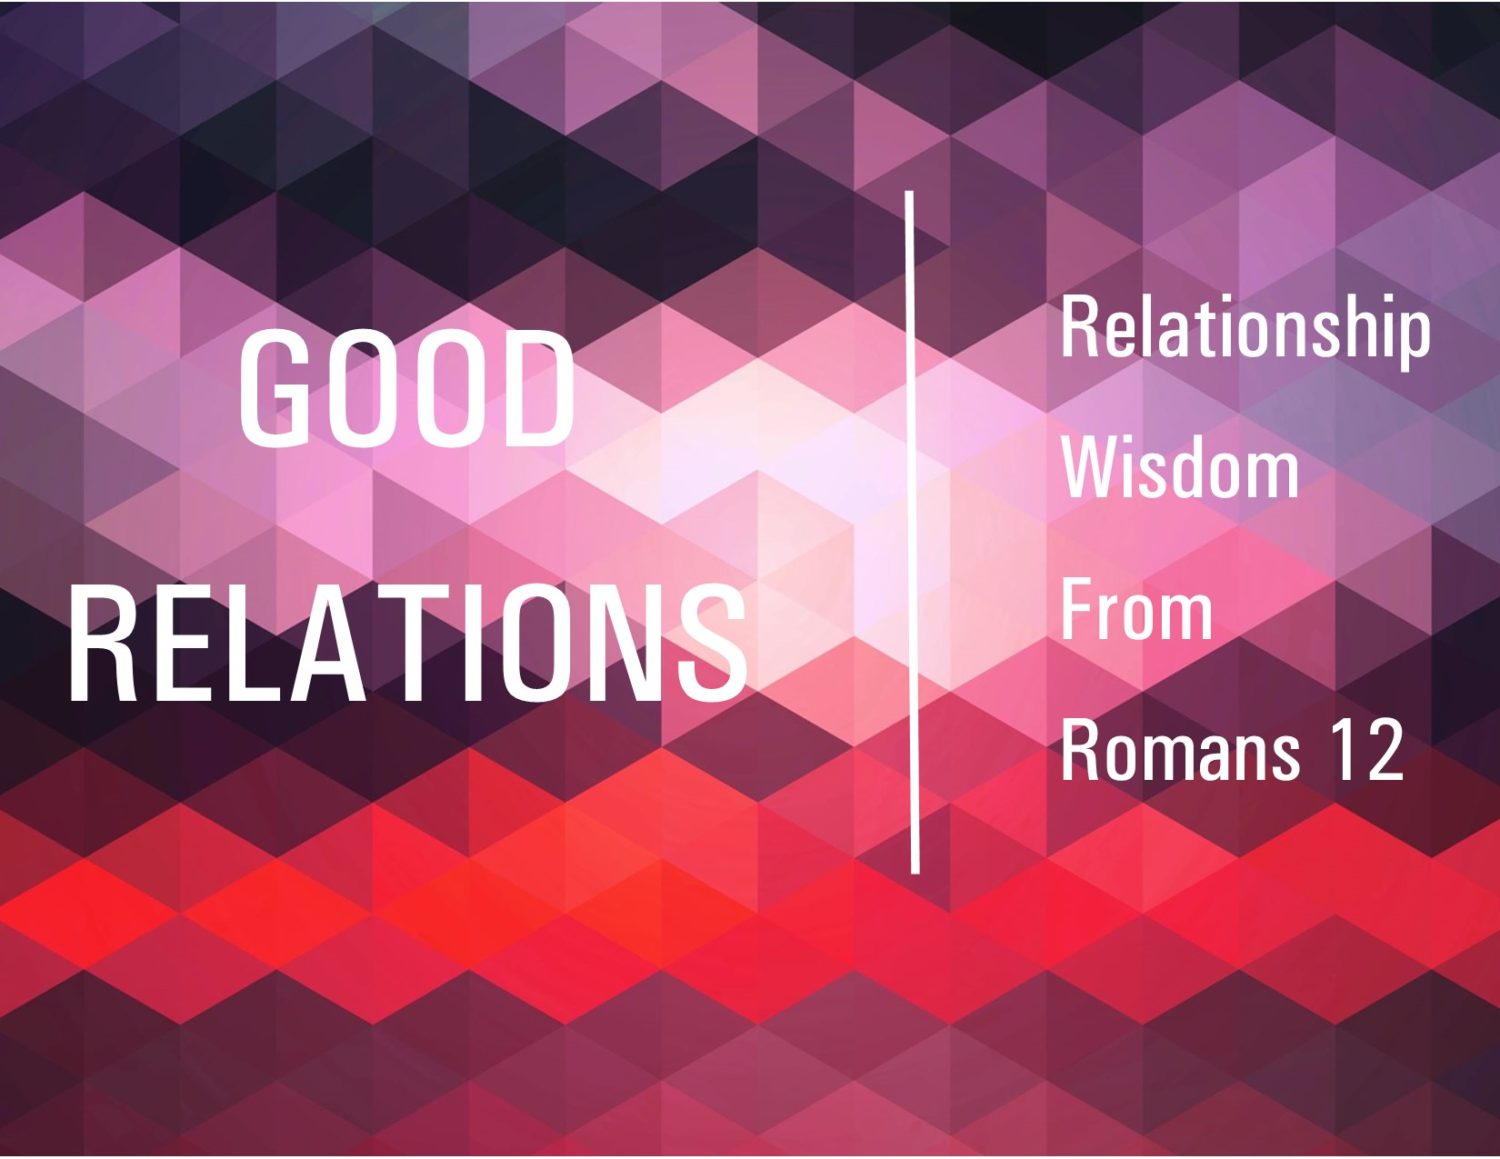 4. Good Relations: Happy Tears